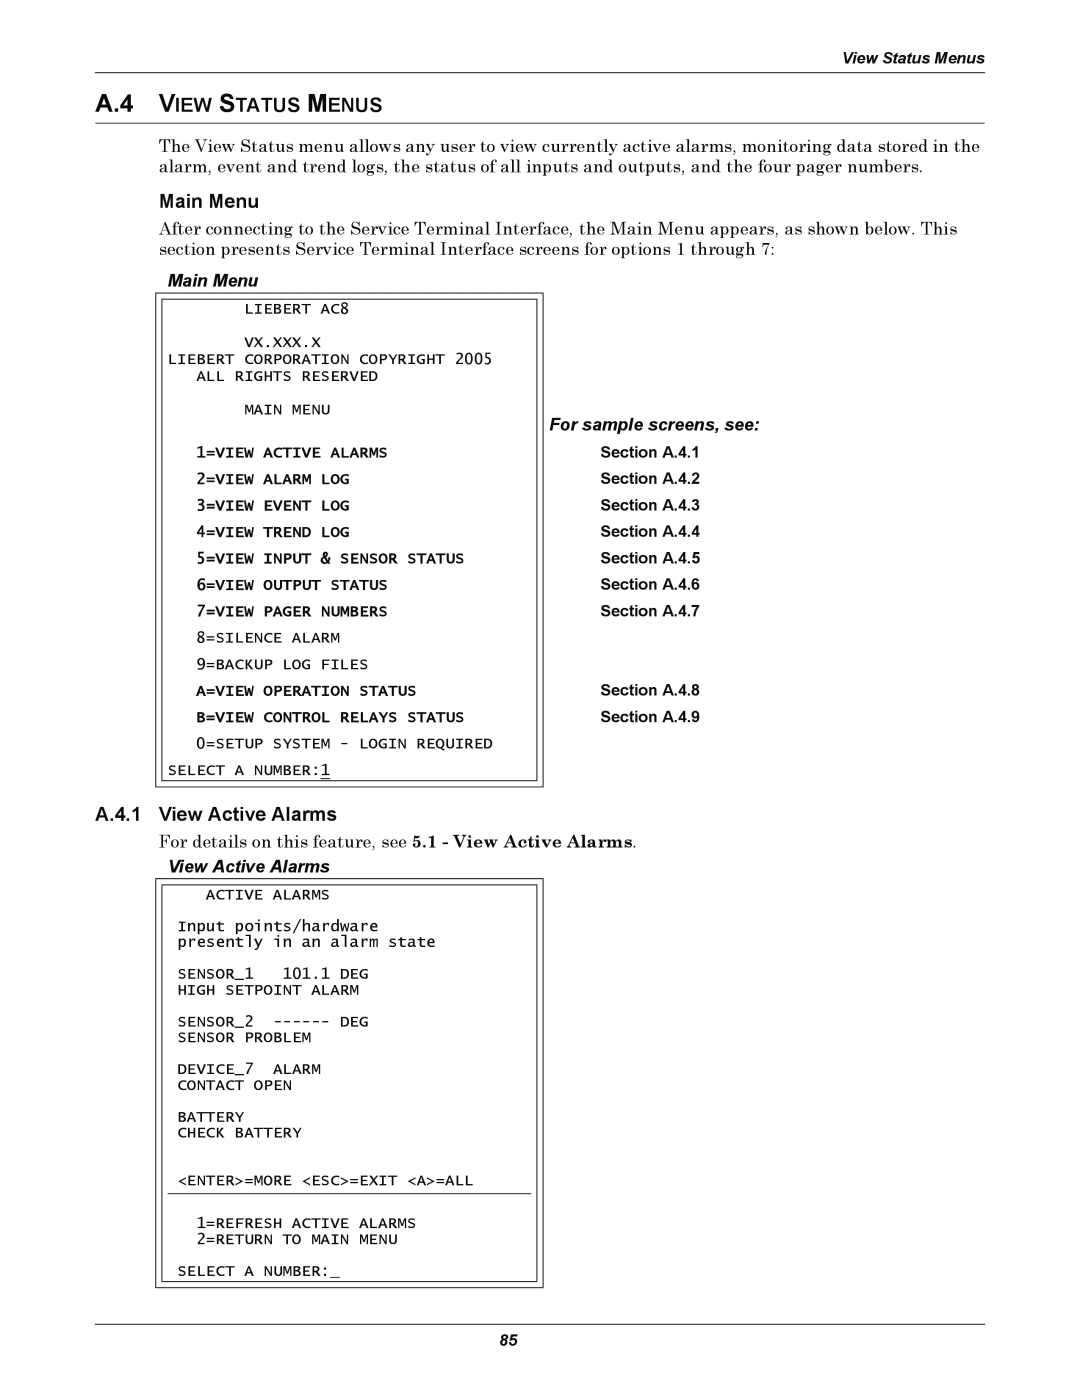 Emerson AC8 user manual A.4 VIEW STATUS MENUS, Main Menu, A.4.1 View Active Alarms, For sample screens, see 